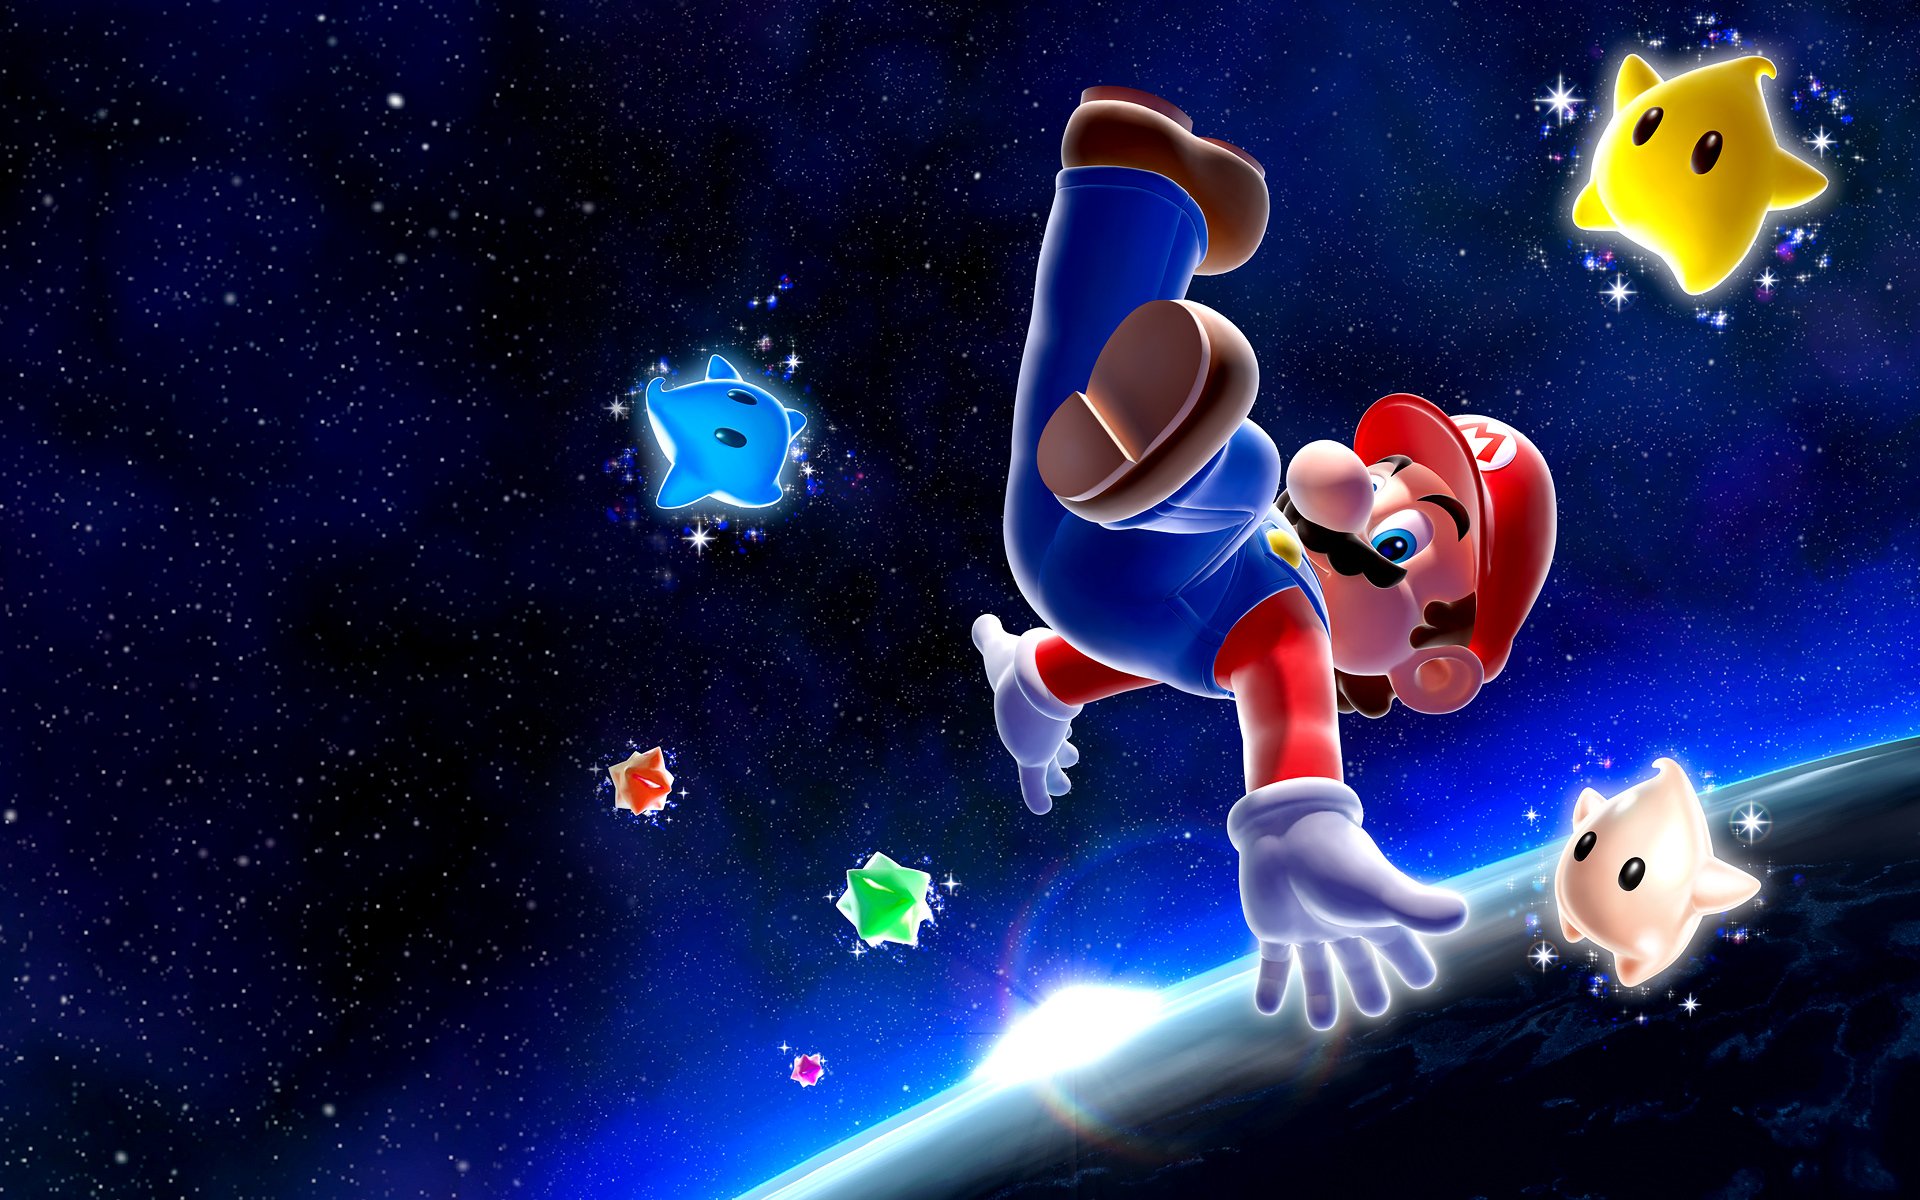 Mario Backgrounds